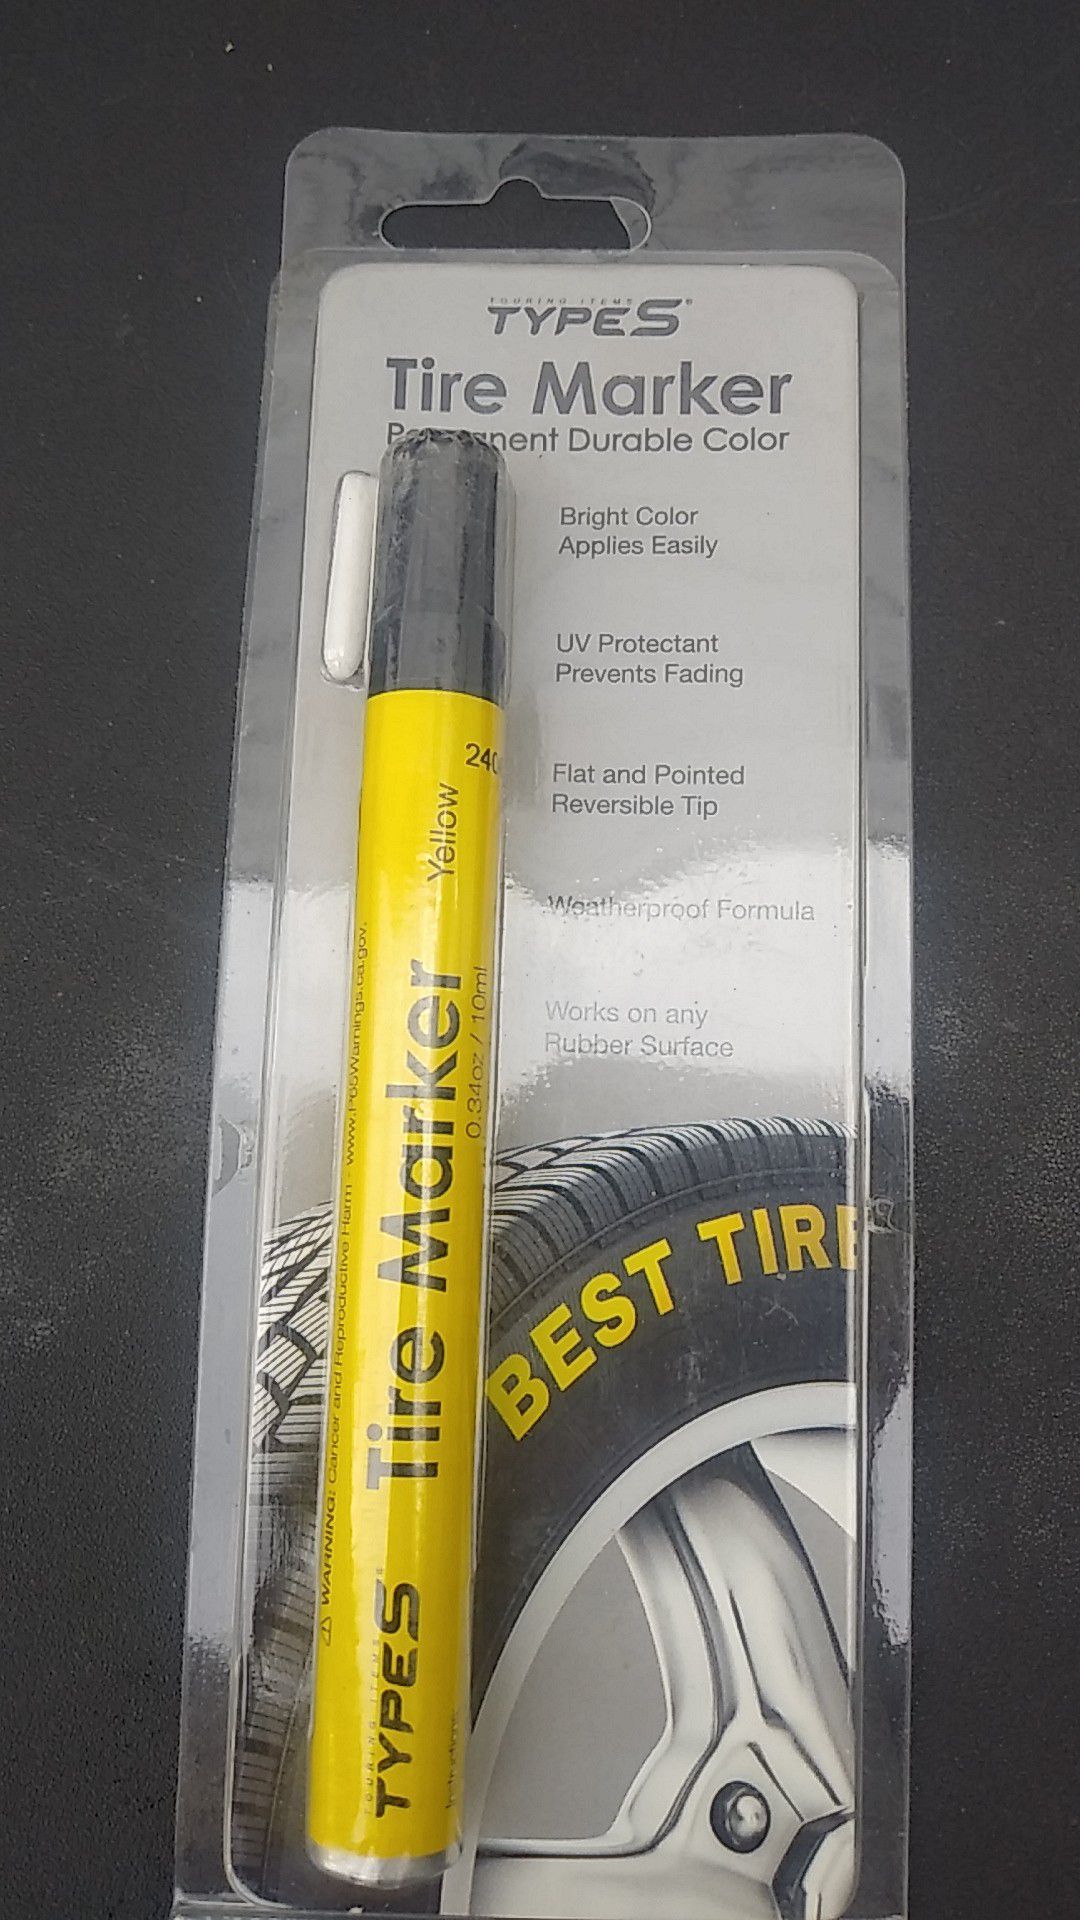 Tire marker